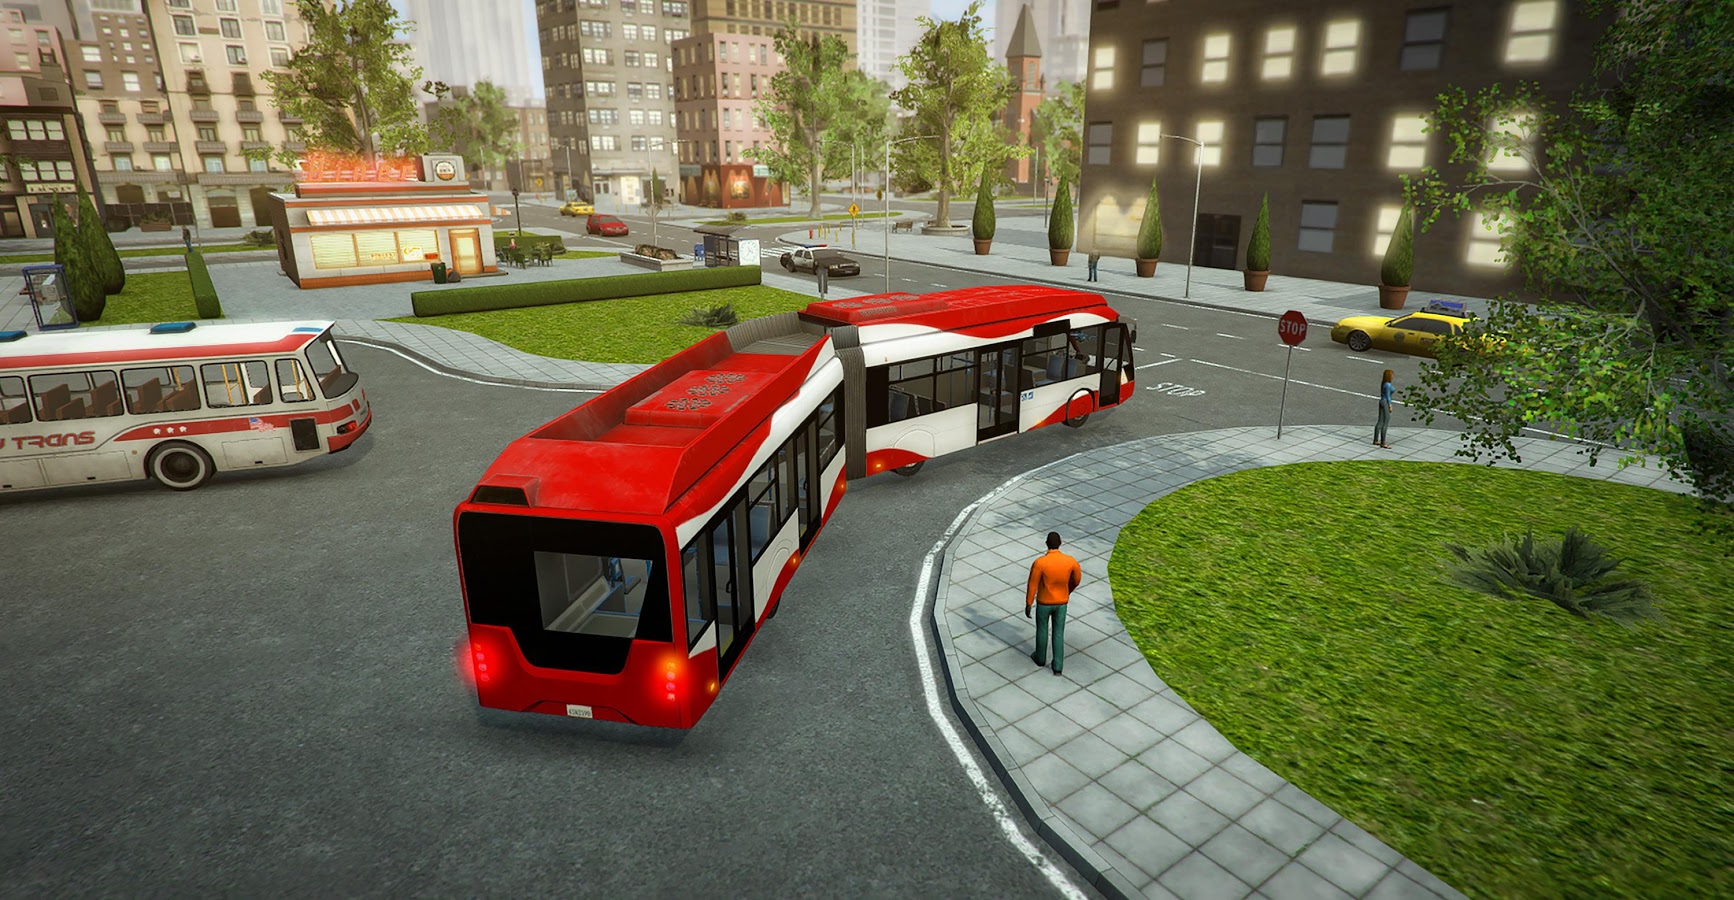 Bus Simulator PRO 2017 (Mod Money)